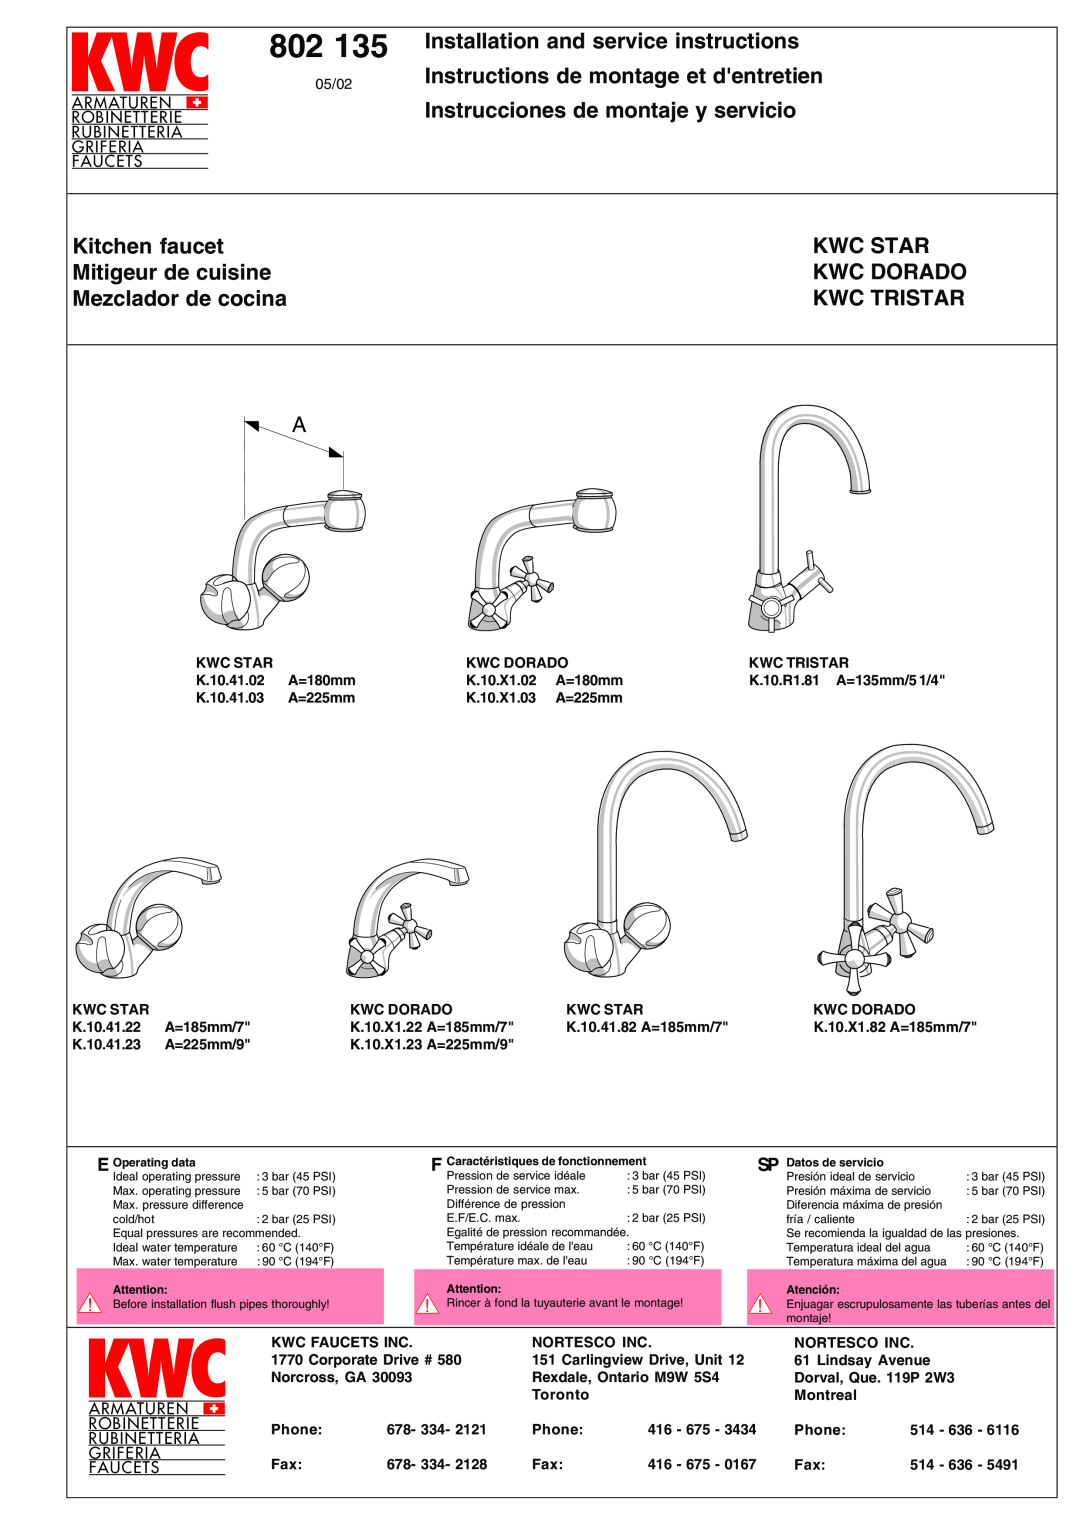 KWC 802 135 manual Installation and service instructions, Instructions de montage et dentretien, Kitchen faucet, Kwc Star 